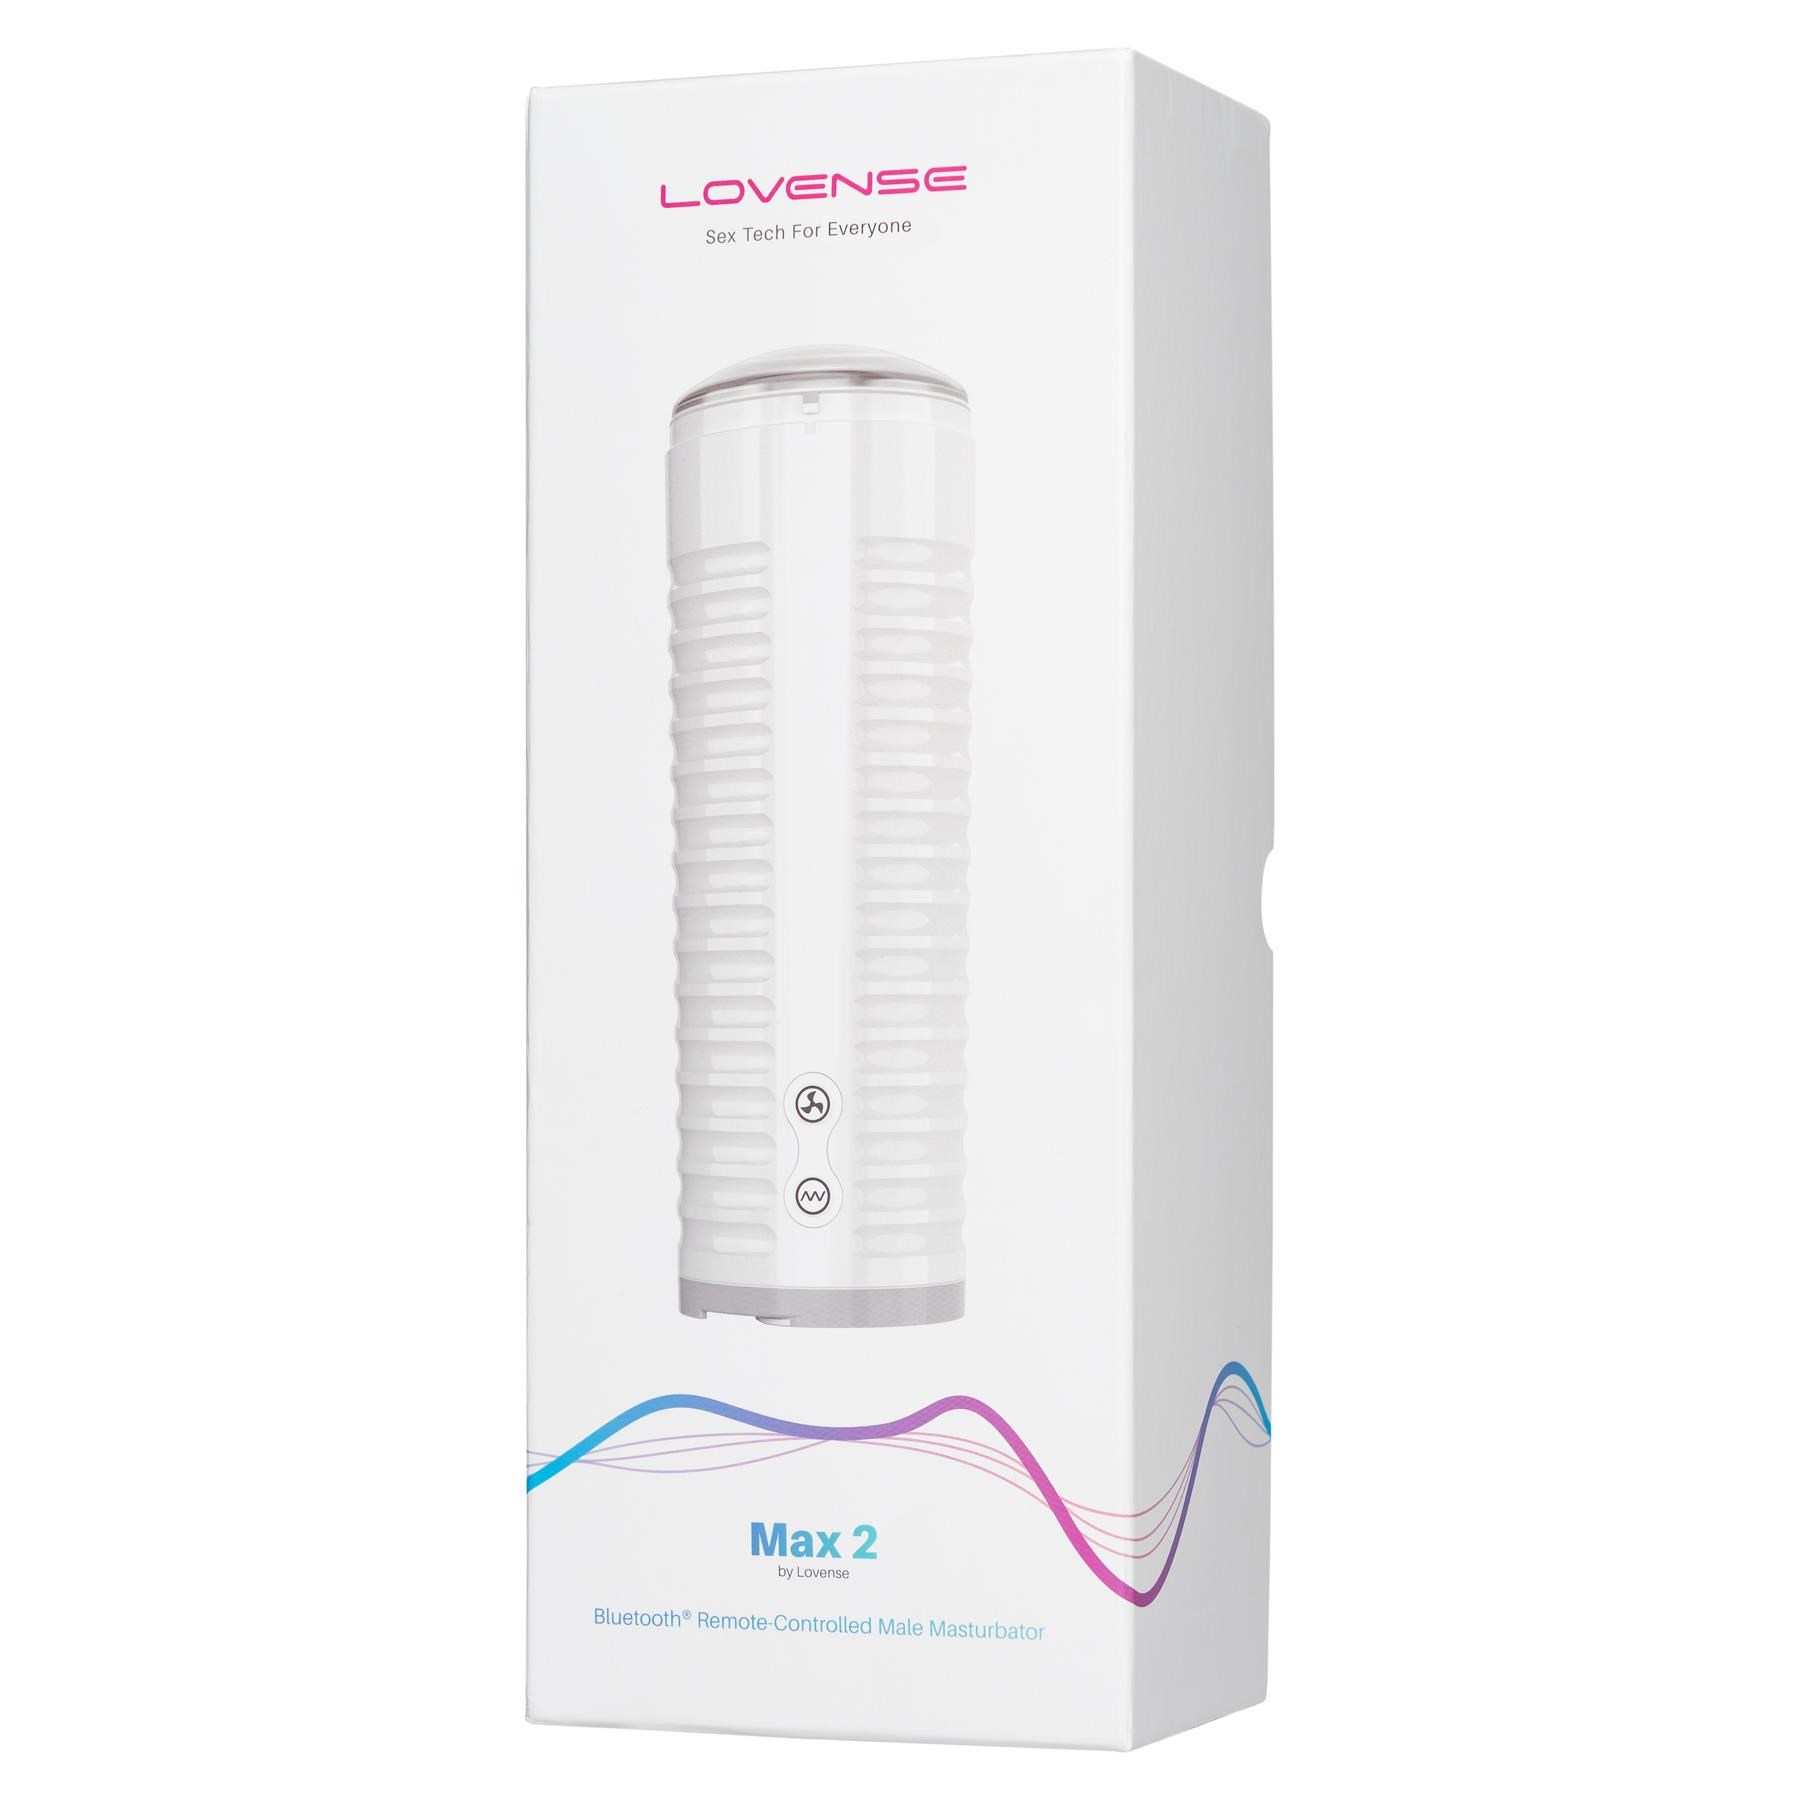 Lovense Max 2 Bluetooth Male Masturbator - Packaging